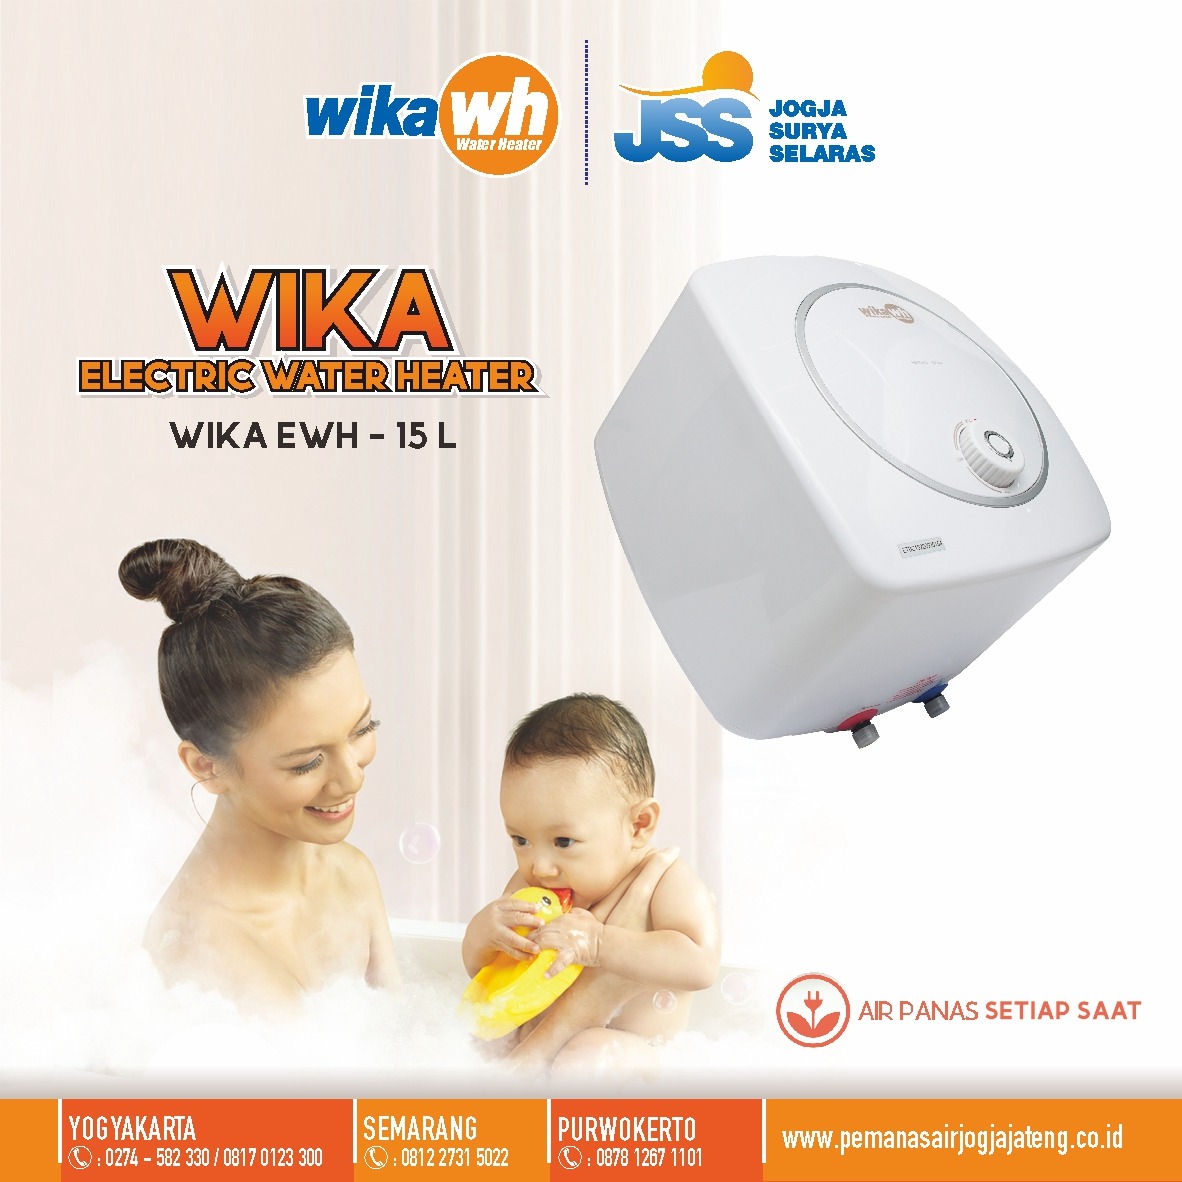 WIKA Electric Water Heater